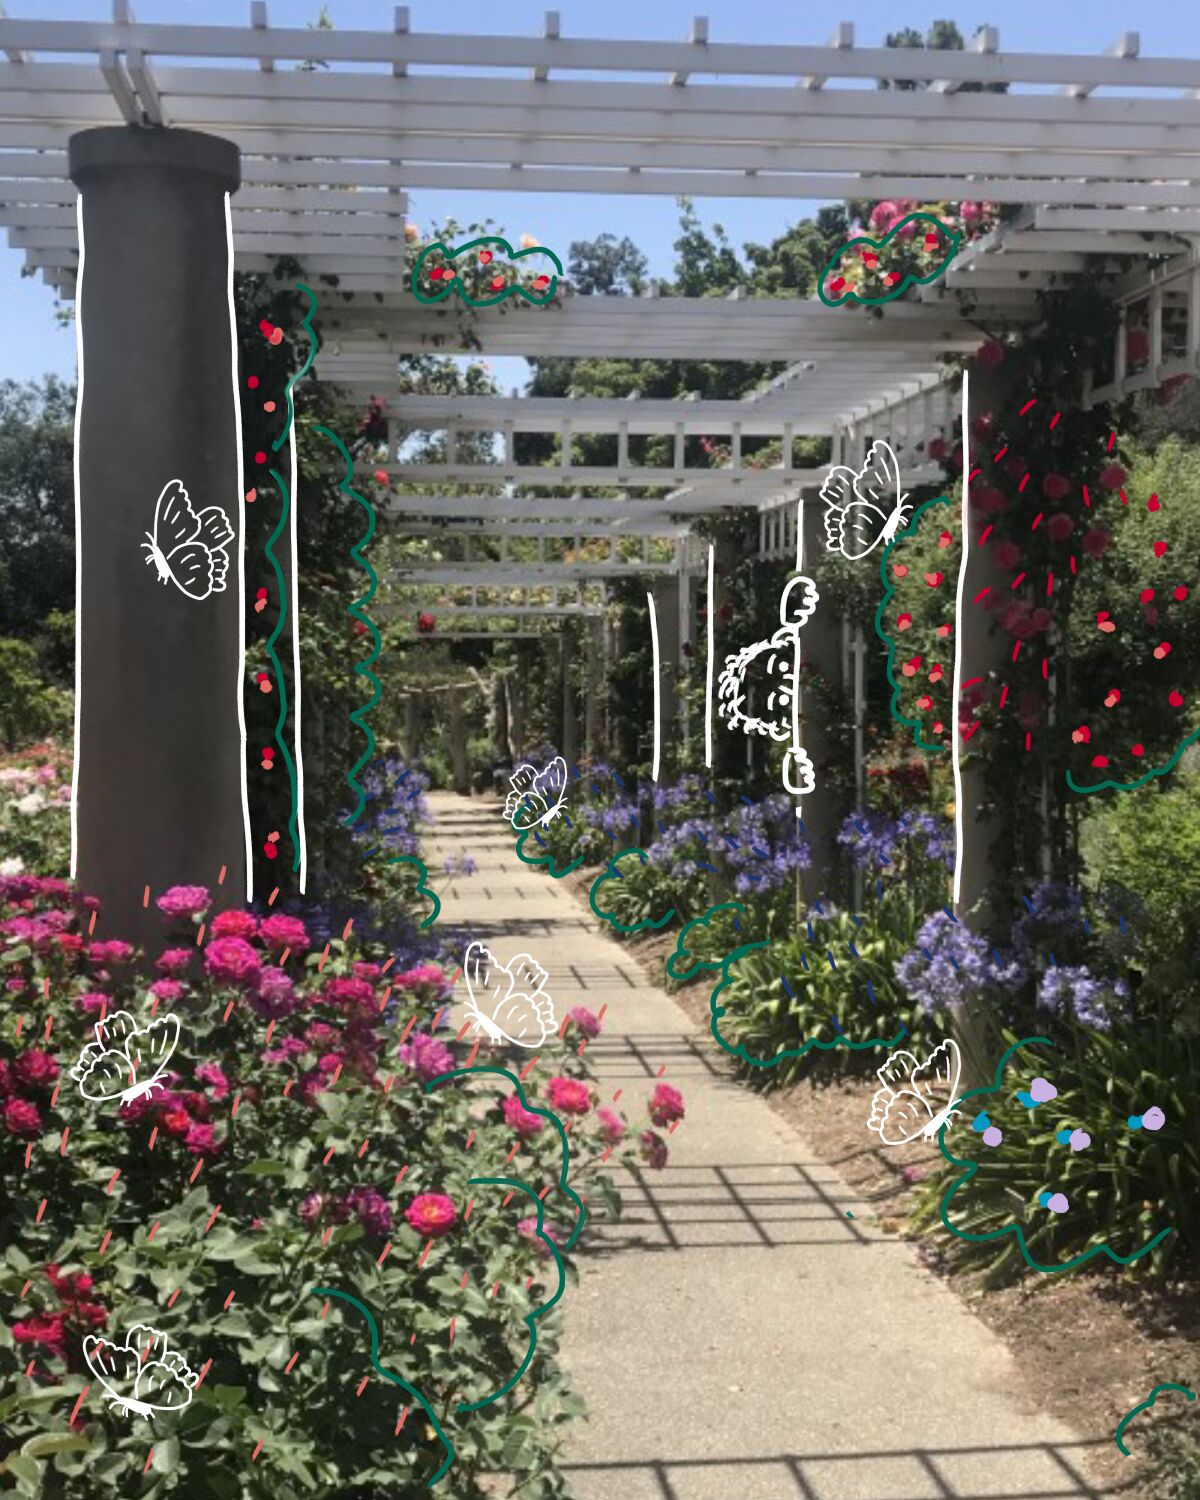 The Rose Garden at the Huntington Botanical Gardens in San Marino.